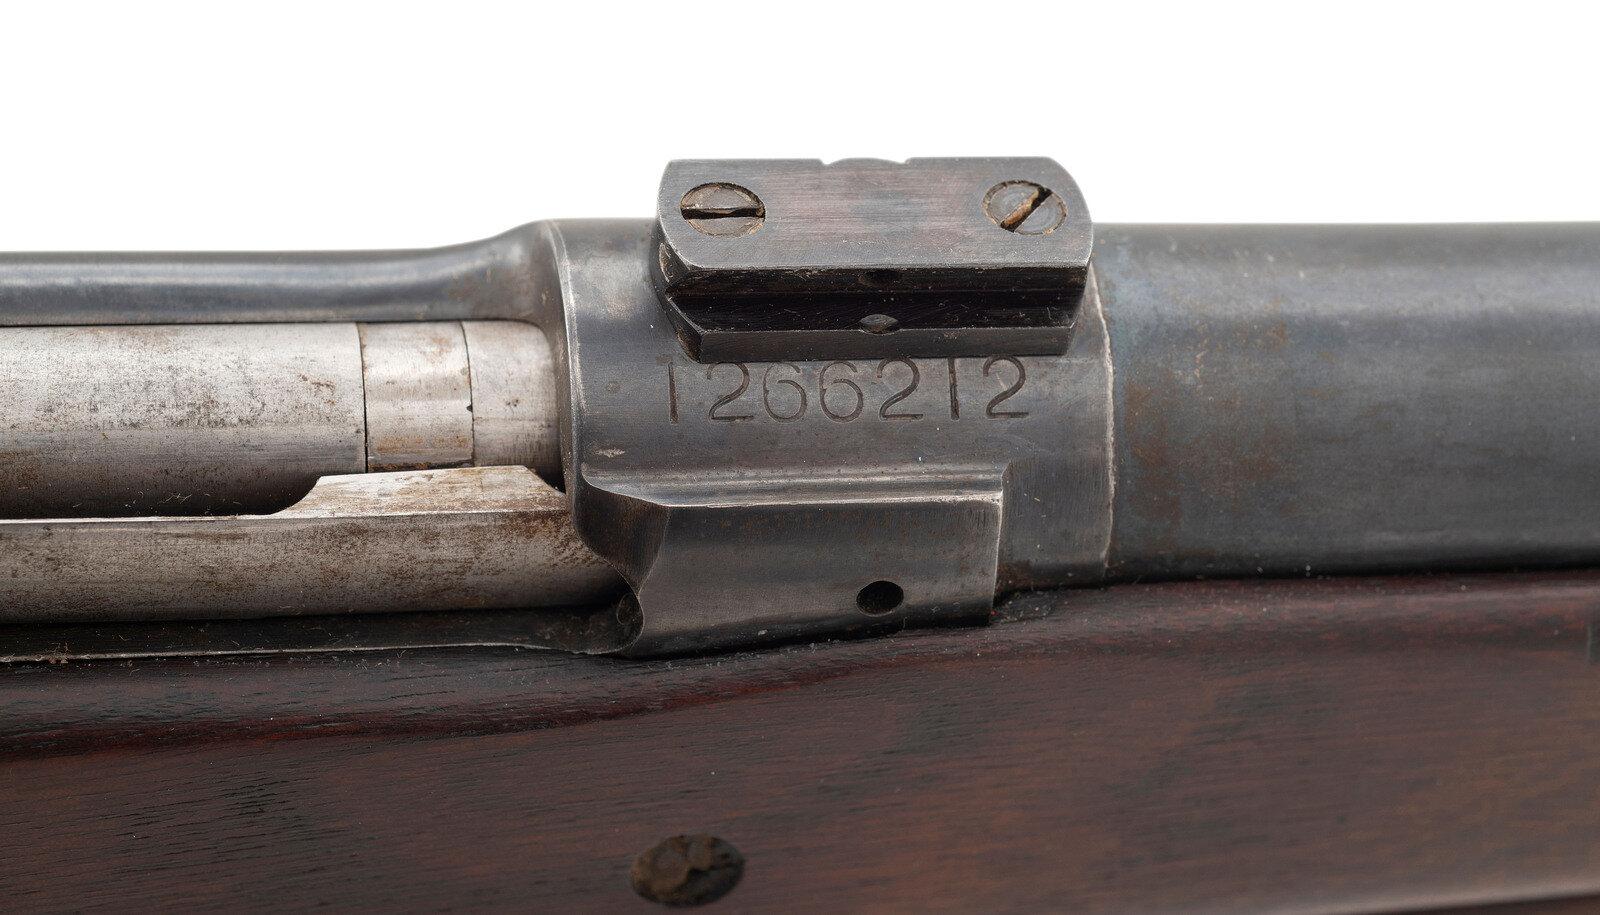 **U.S. Springfield Model 1903 Schuetzen Type Target Rifle